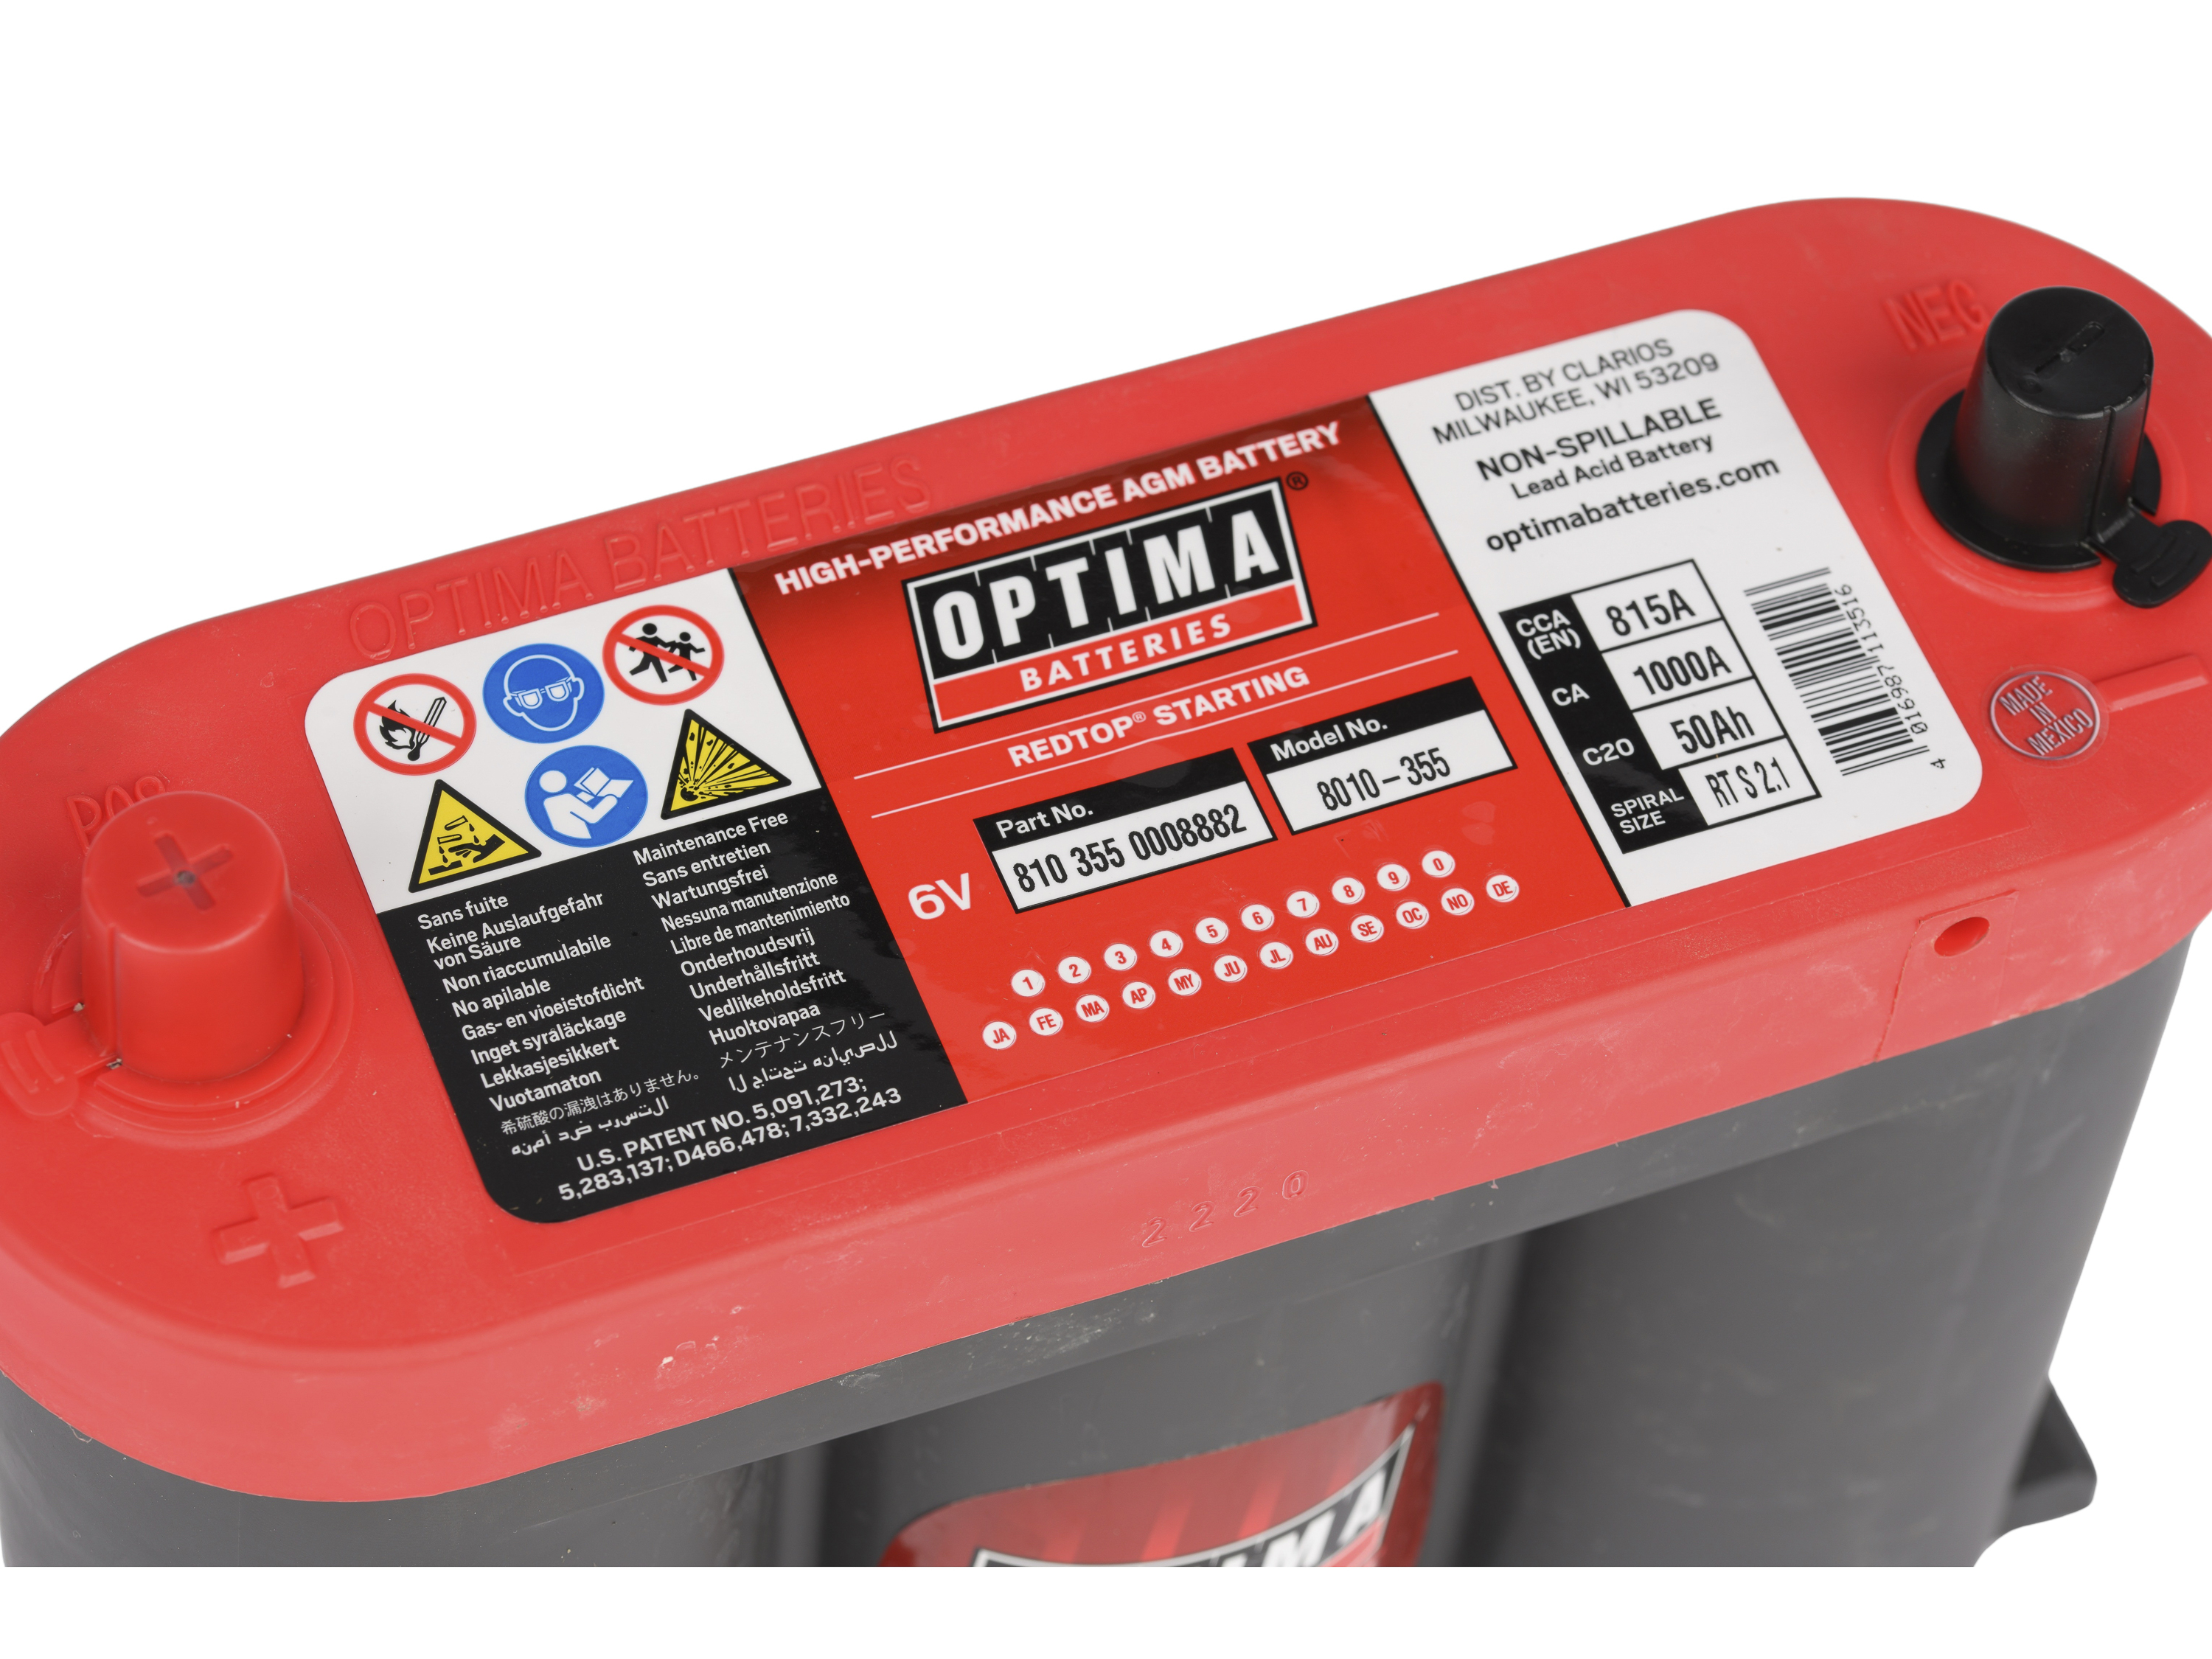 Optima Red Top S-2.1 (6V) 50Ah 815CCA batteri - 810355000